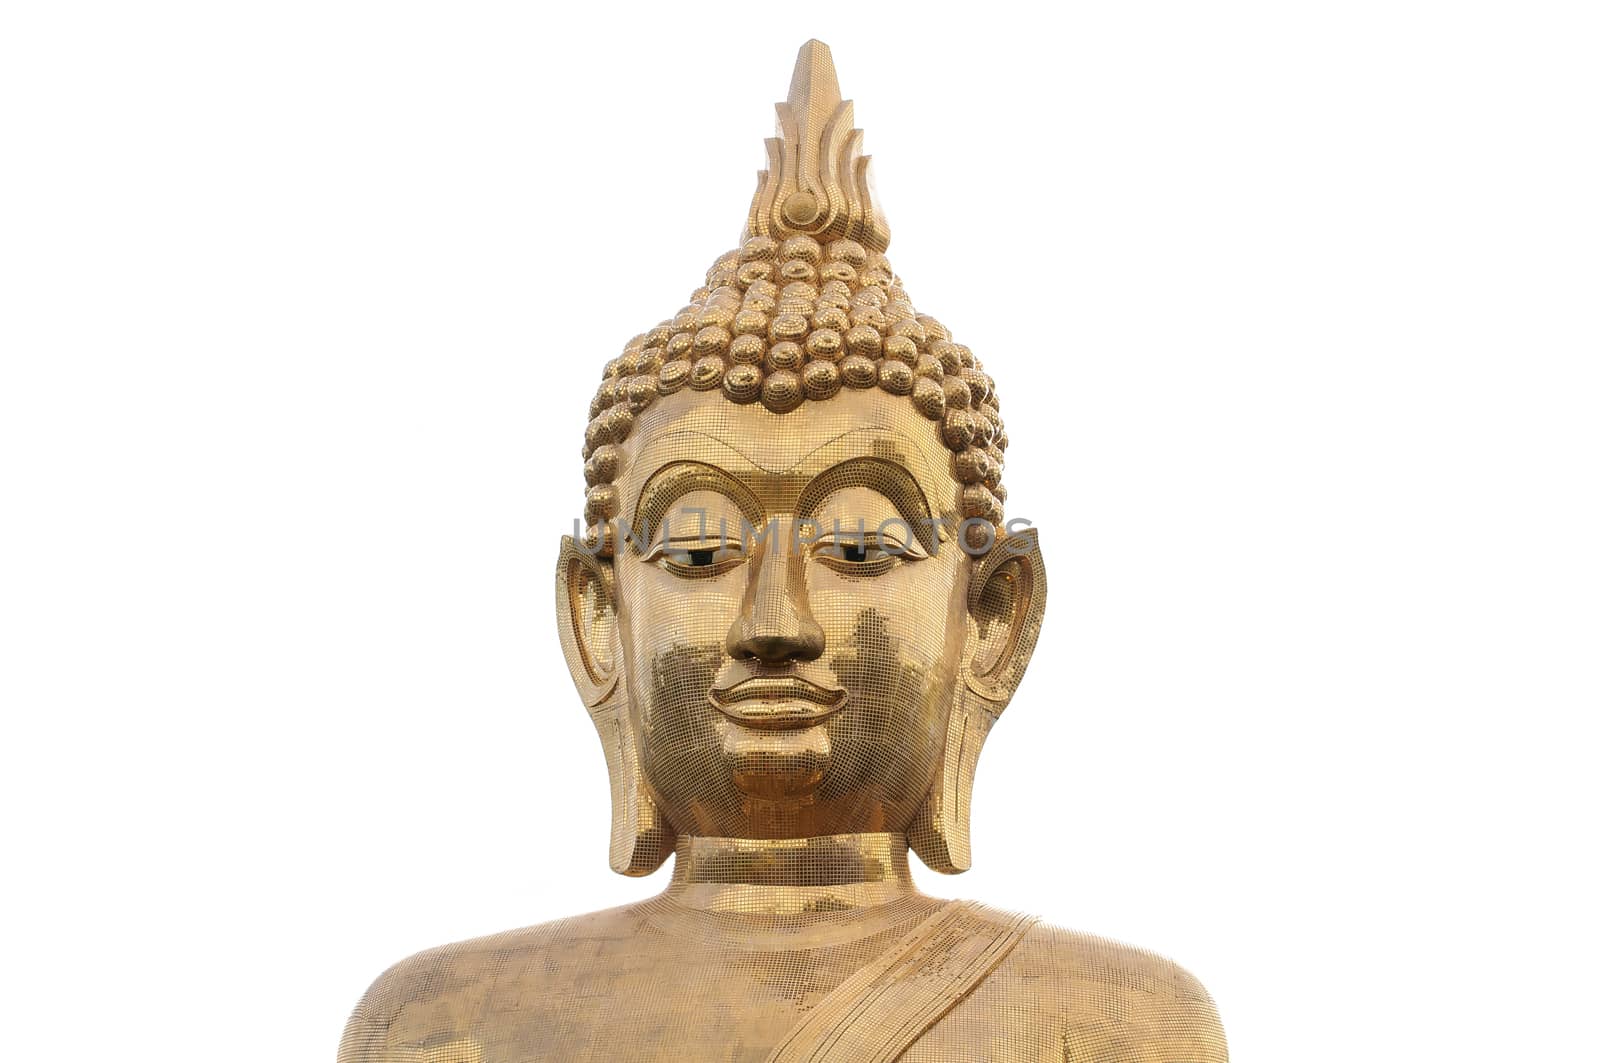 The face of golden buddha.